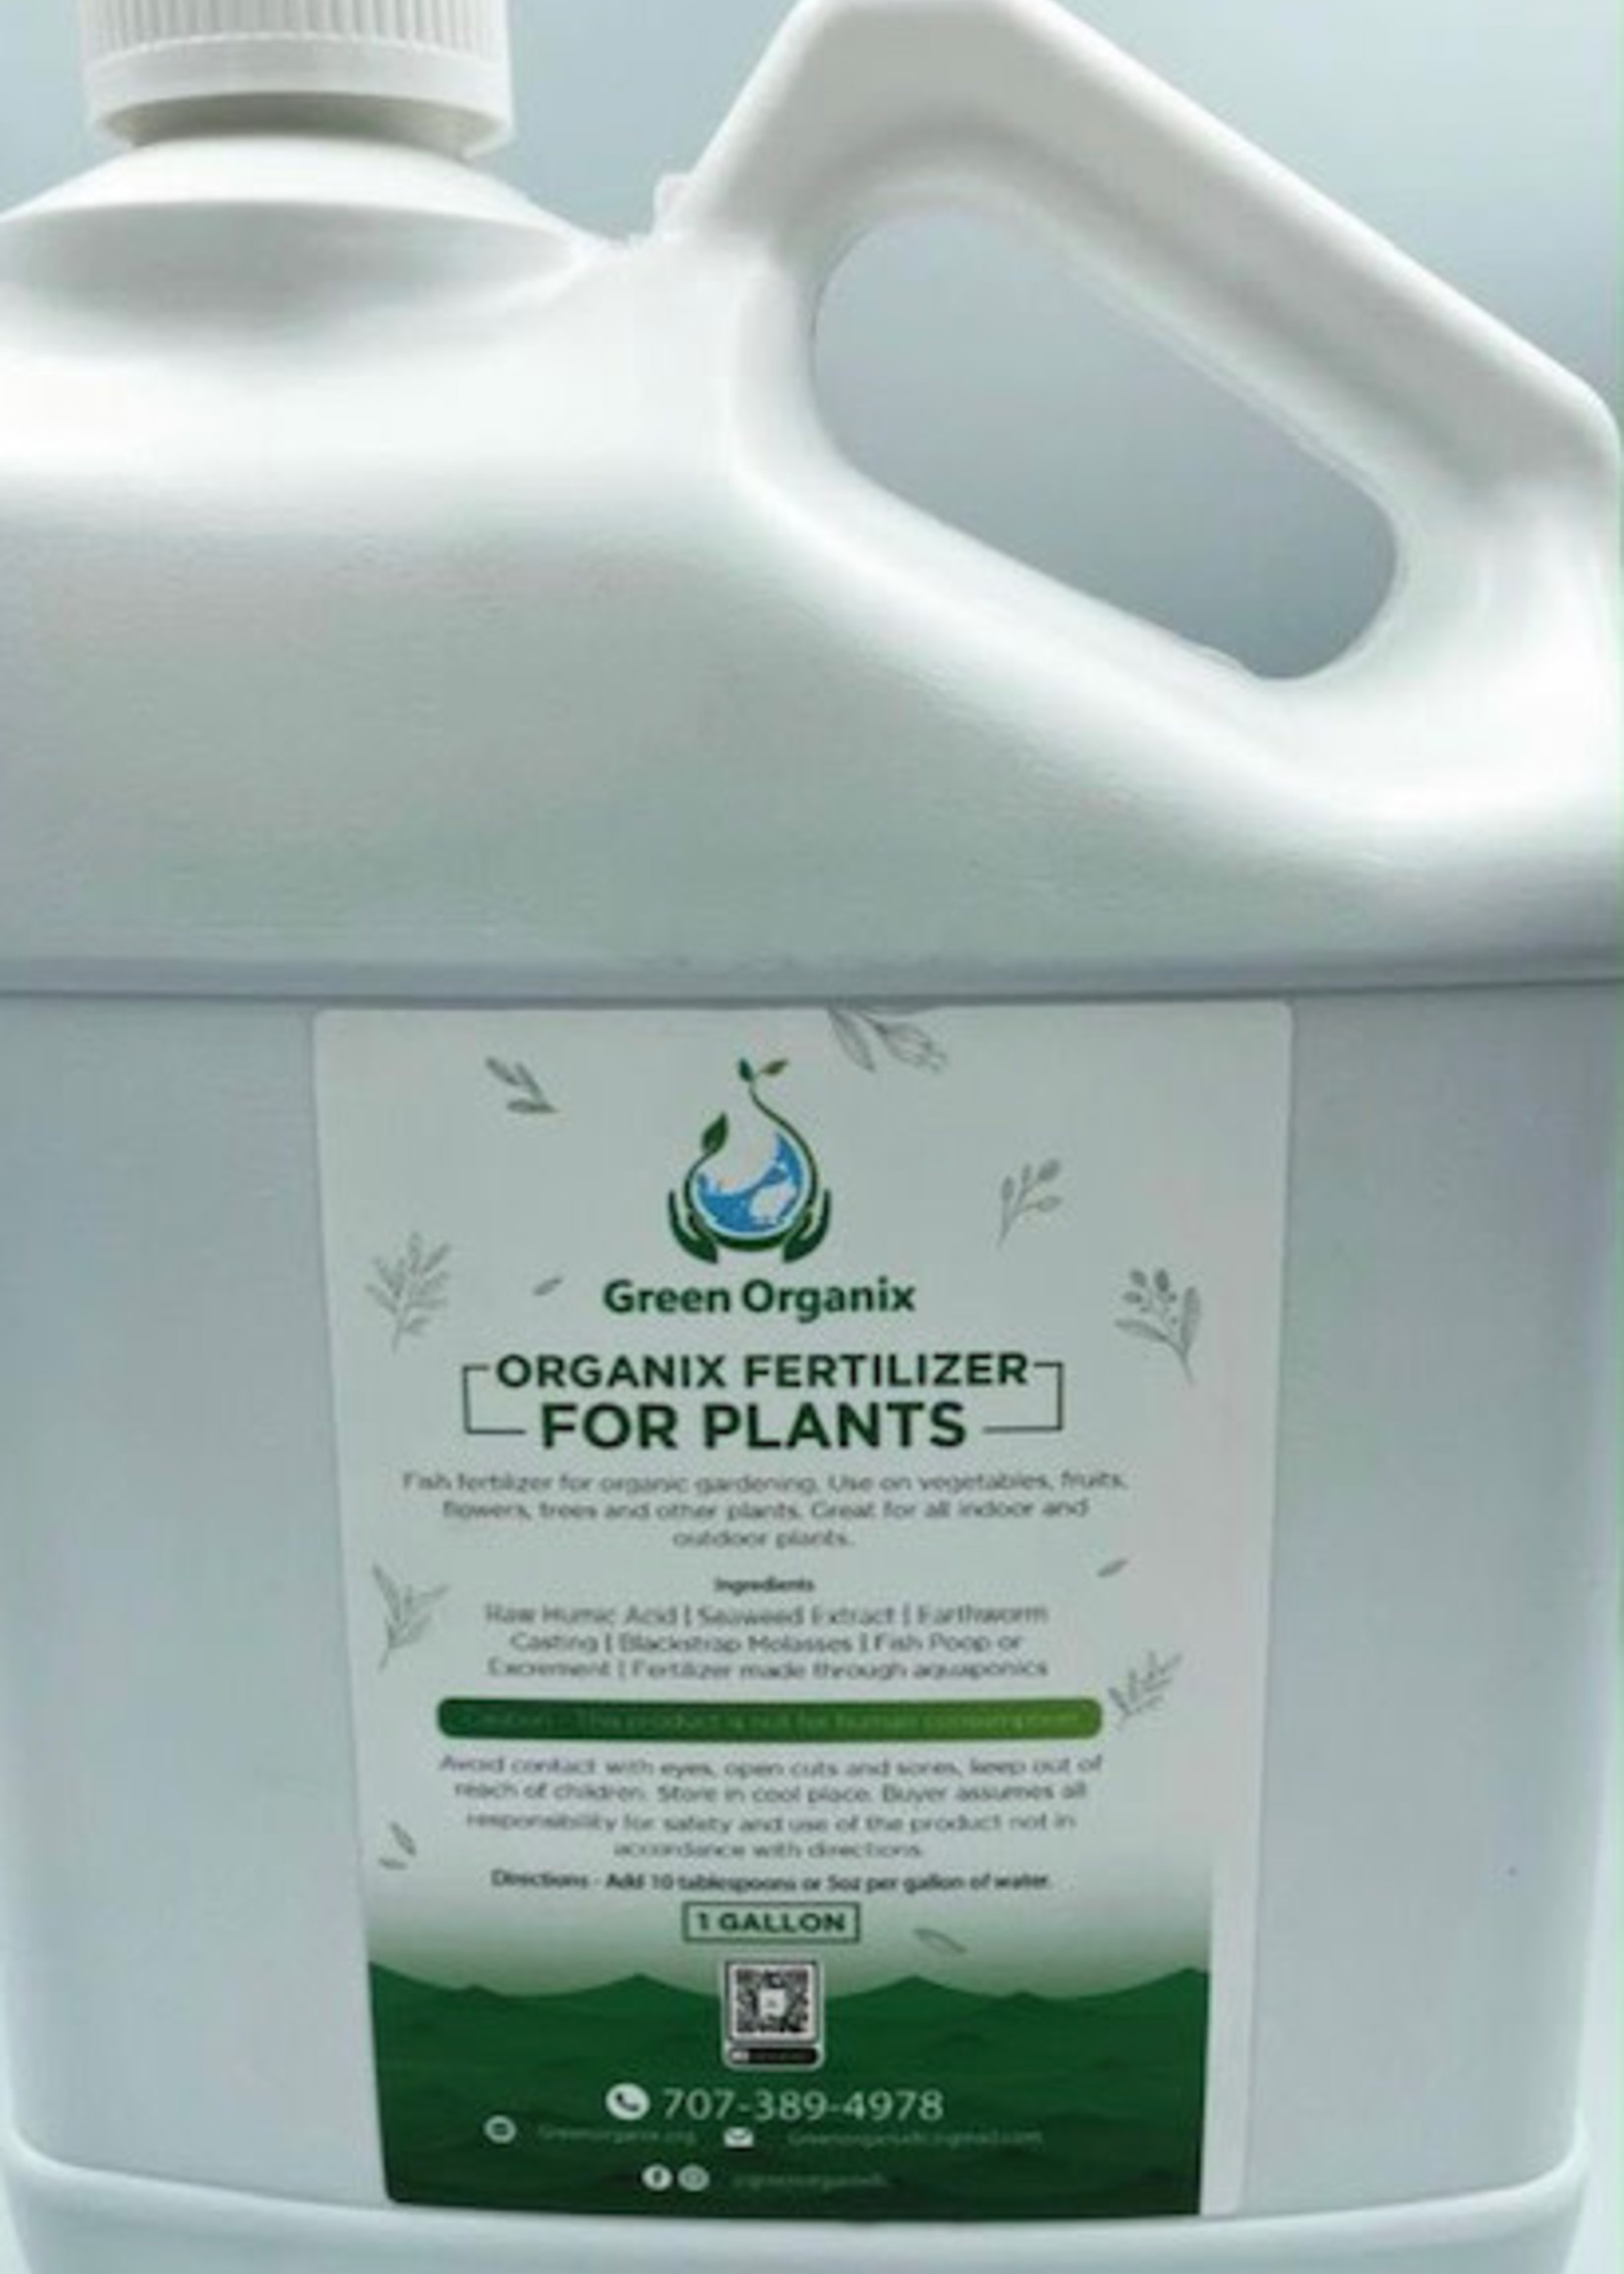 Green Organix Green Organix Fertilizer for Plants